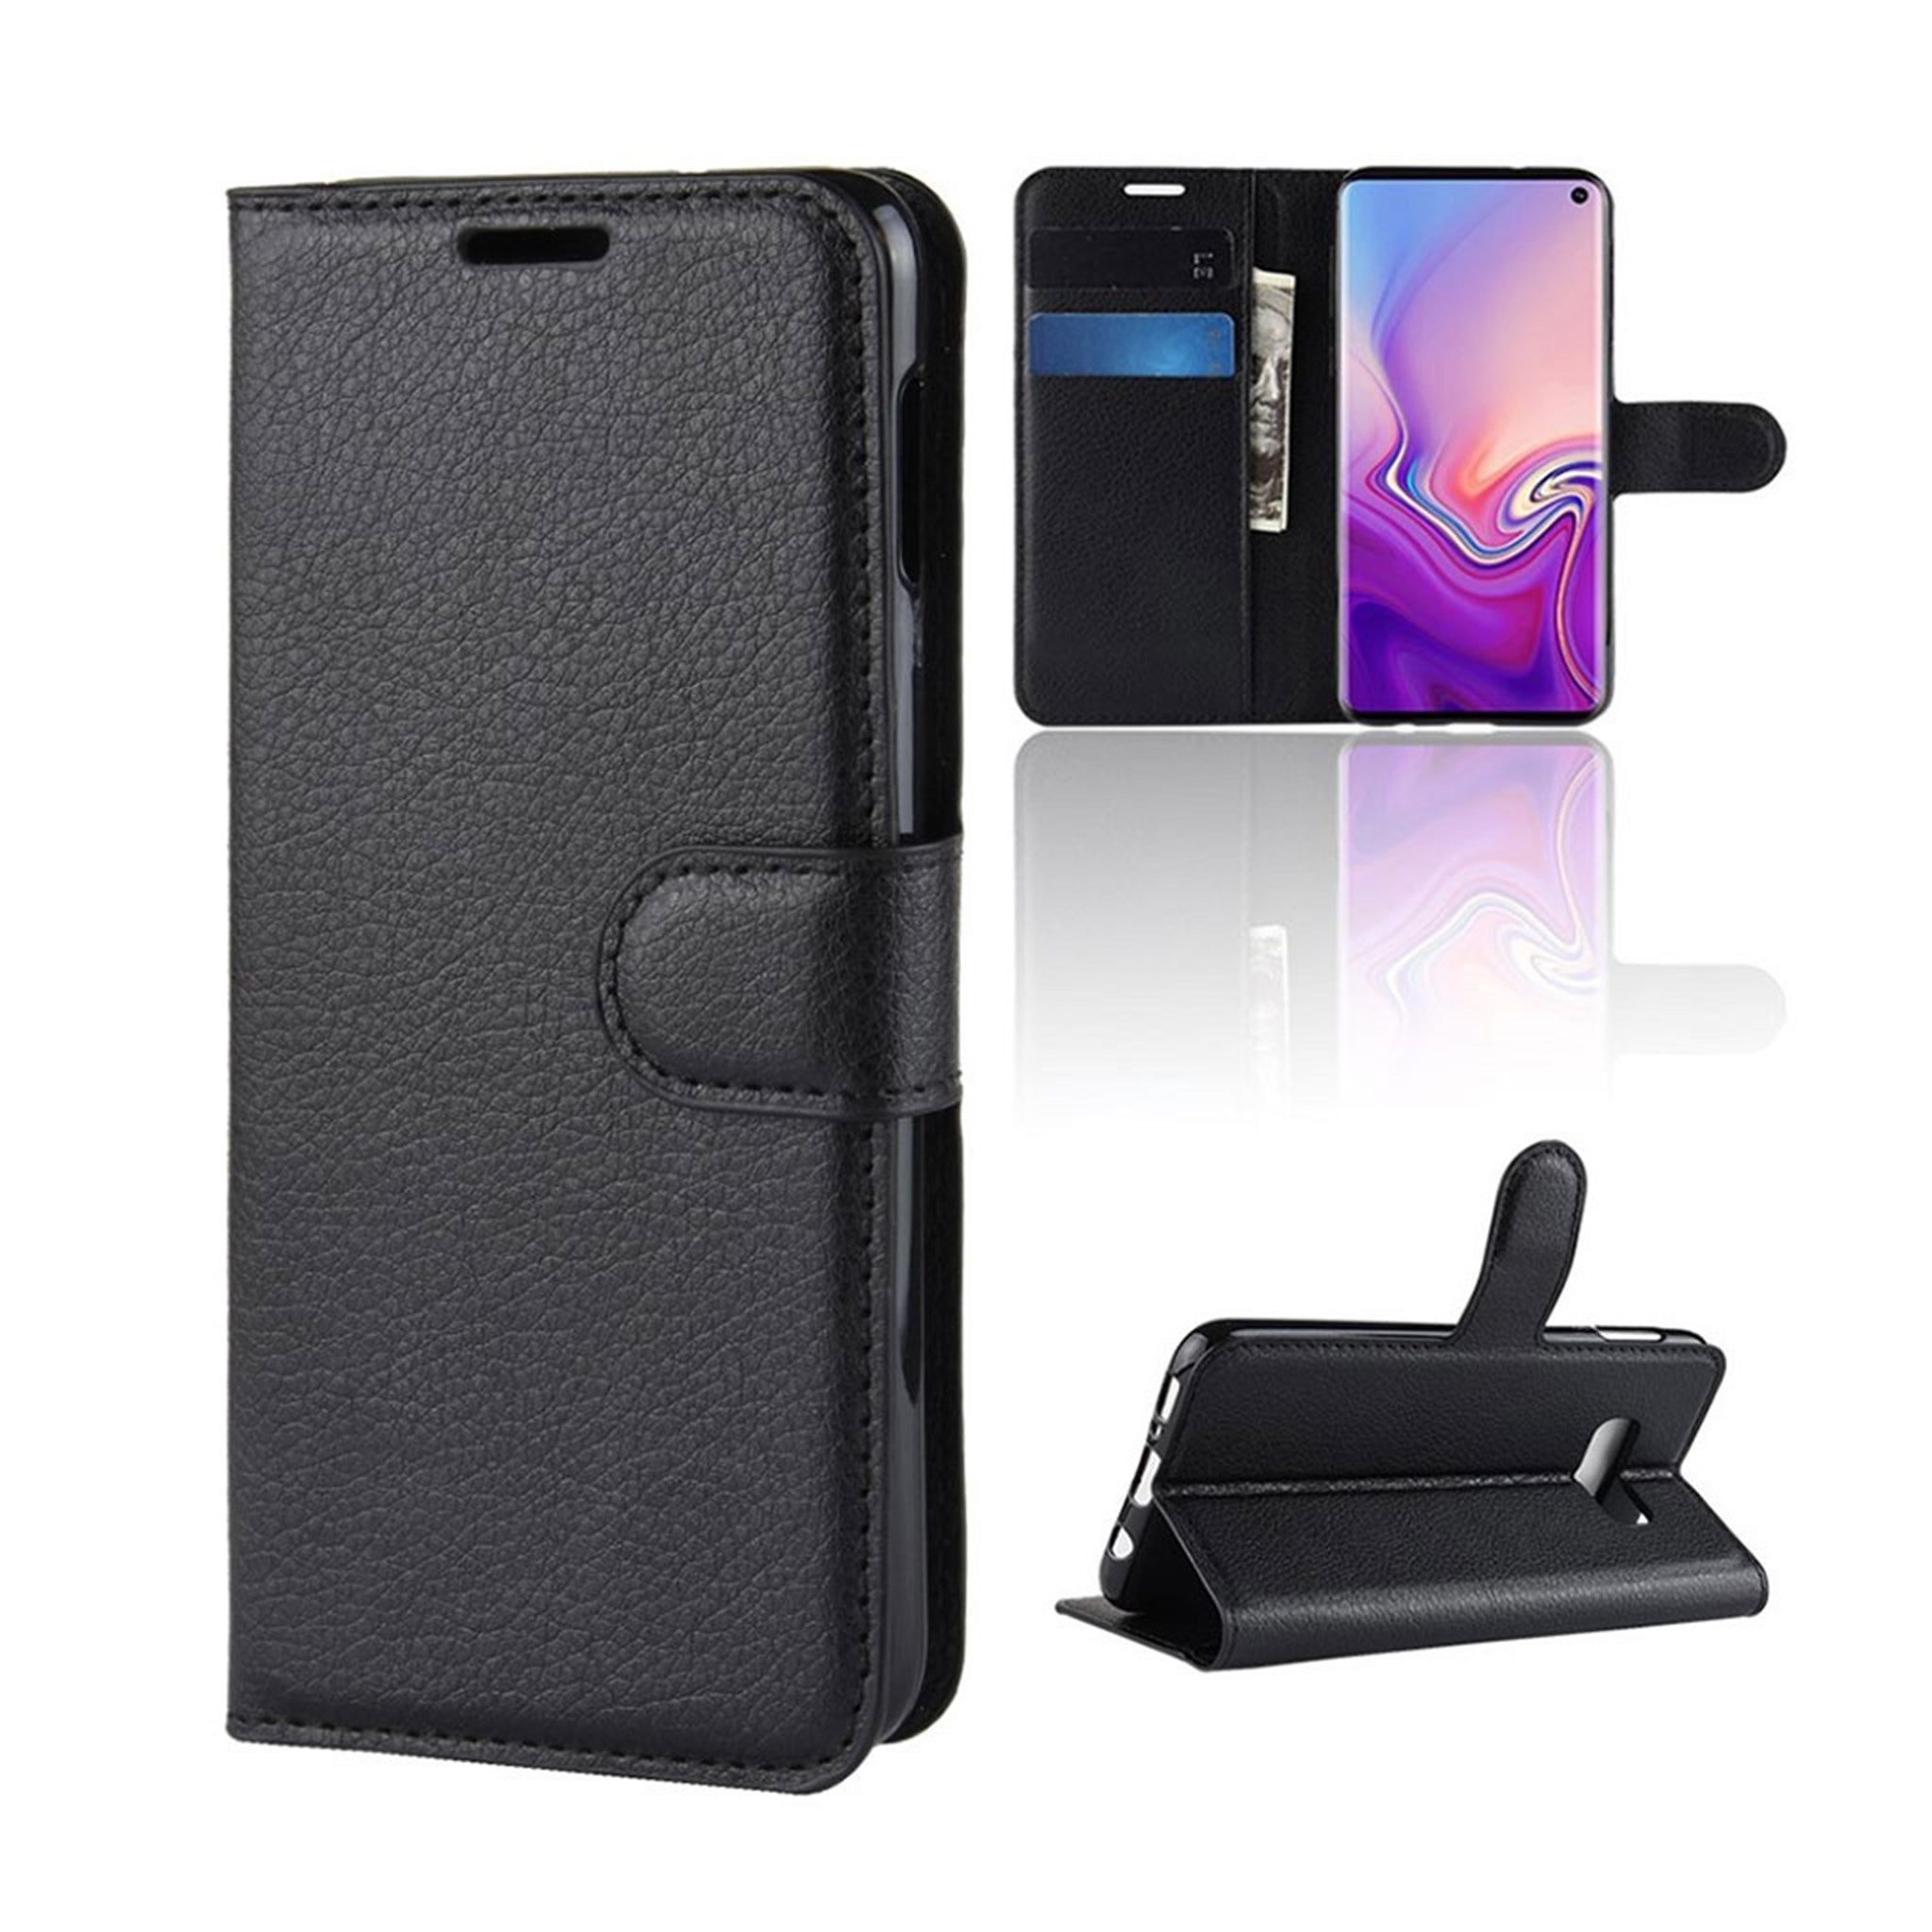 Samsung Galaxy S10e litchi skin leather flip case - Black